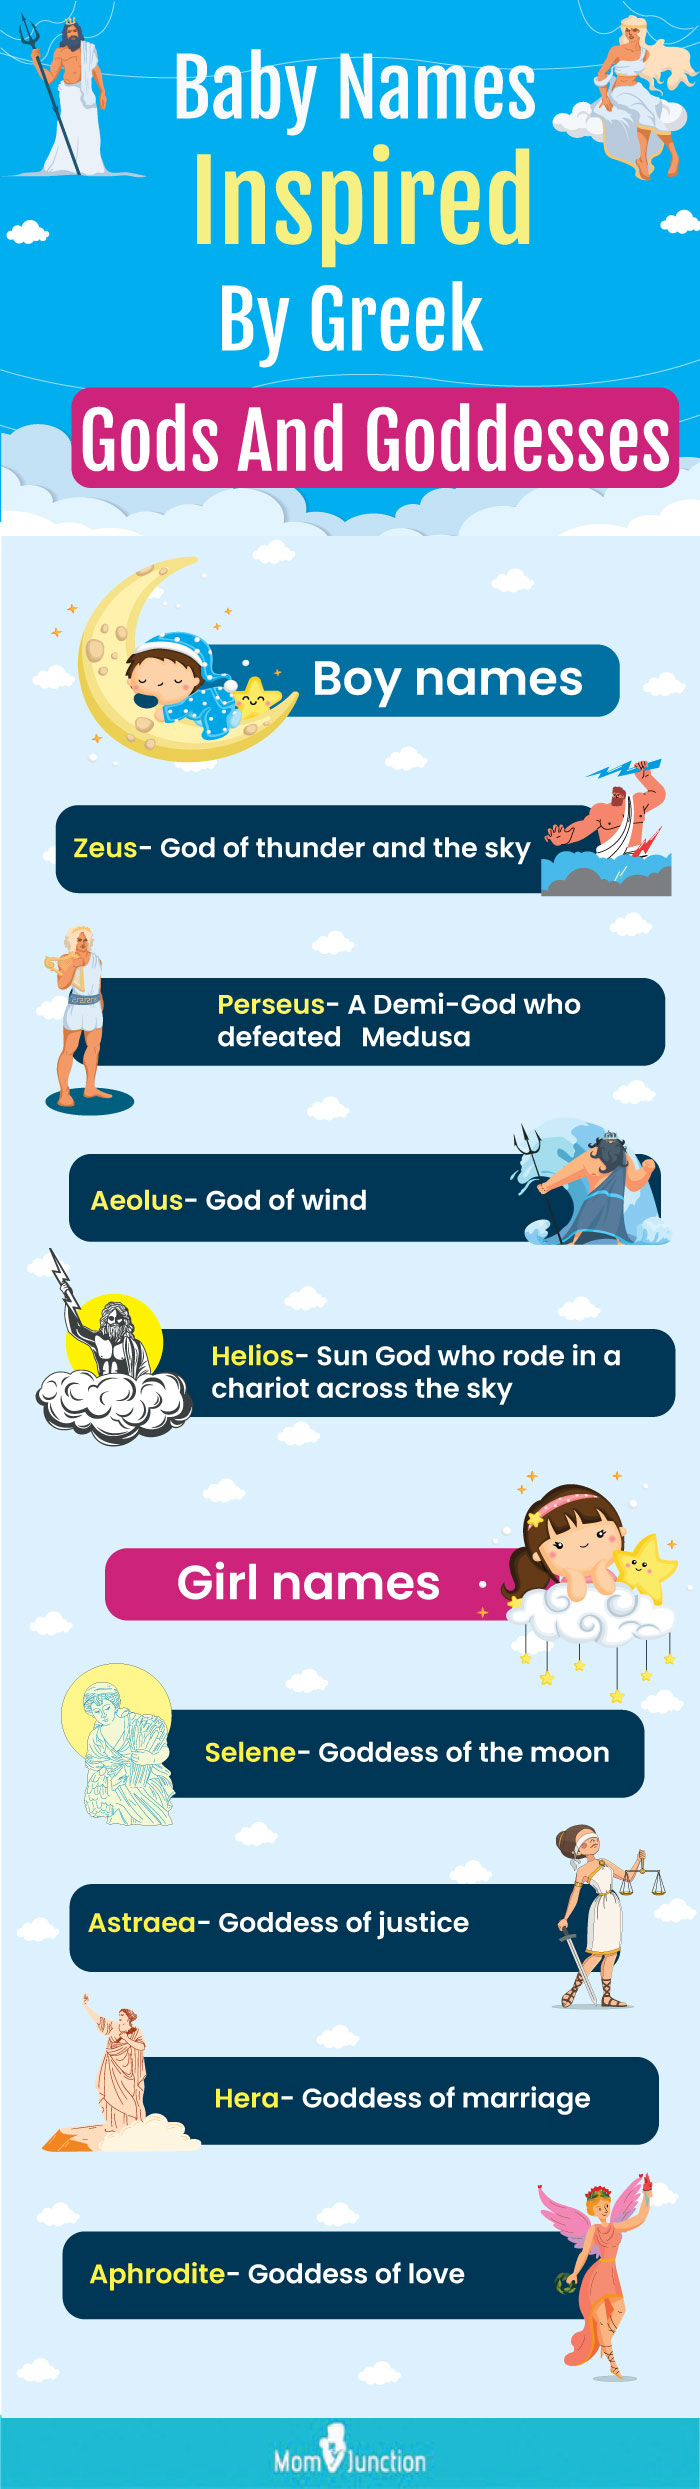 god and goddesses baby names (infographic)